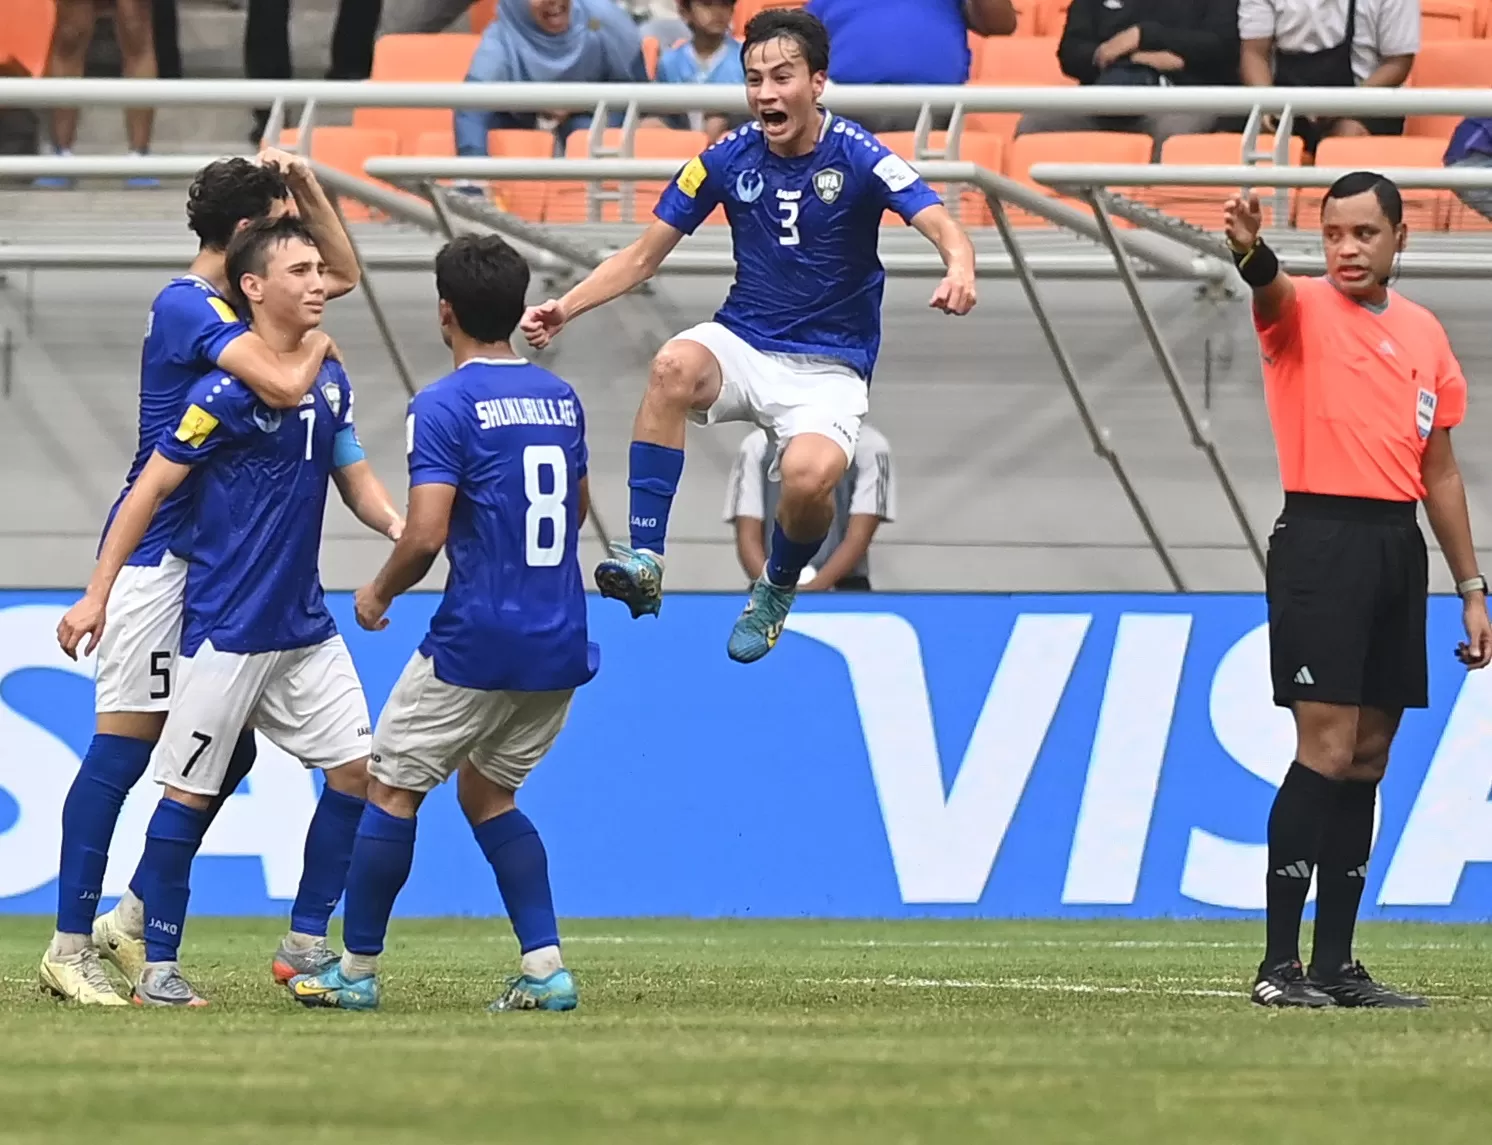 Piala Dunia U-17: Singkirkan Inggris, Uzbekistan Ke Perempat Final Sebagai Wakil Asia Terakhir - Akurat